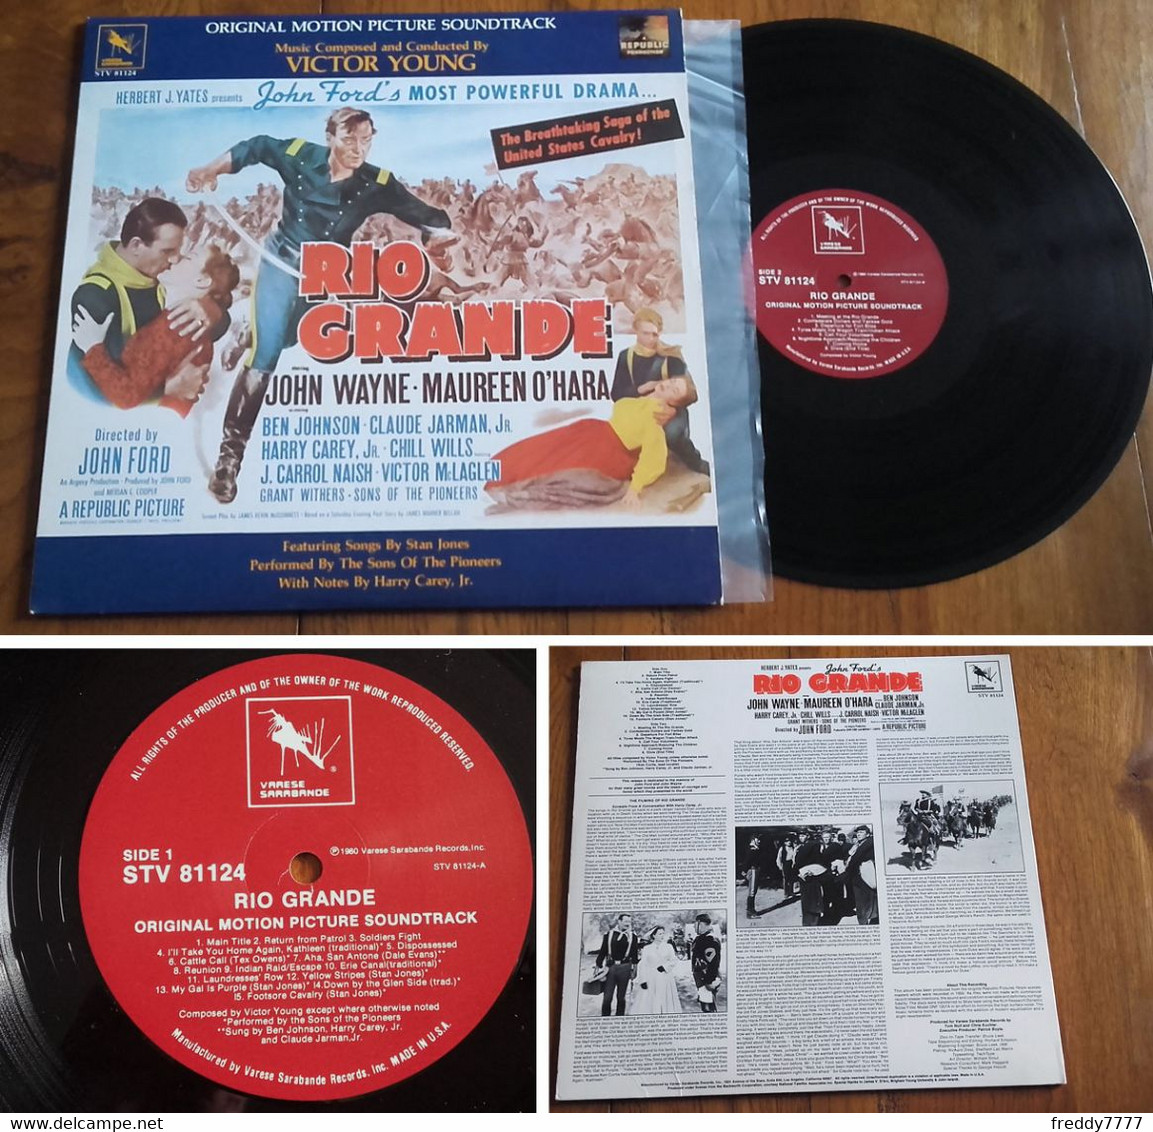 RARE U.S. LP 33t RPM (12") BOF OST "RIO GRANDE" (John Wayne P/s, 1980) - Soundtracks, Film Music